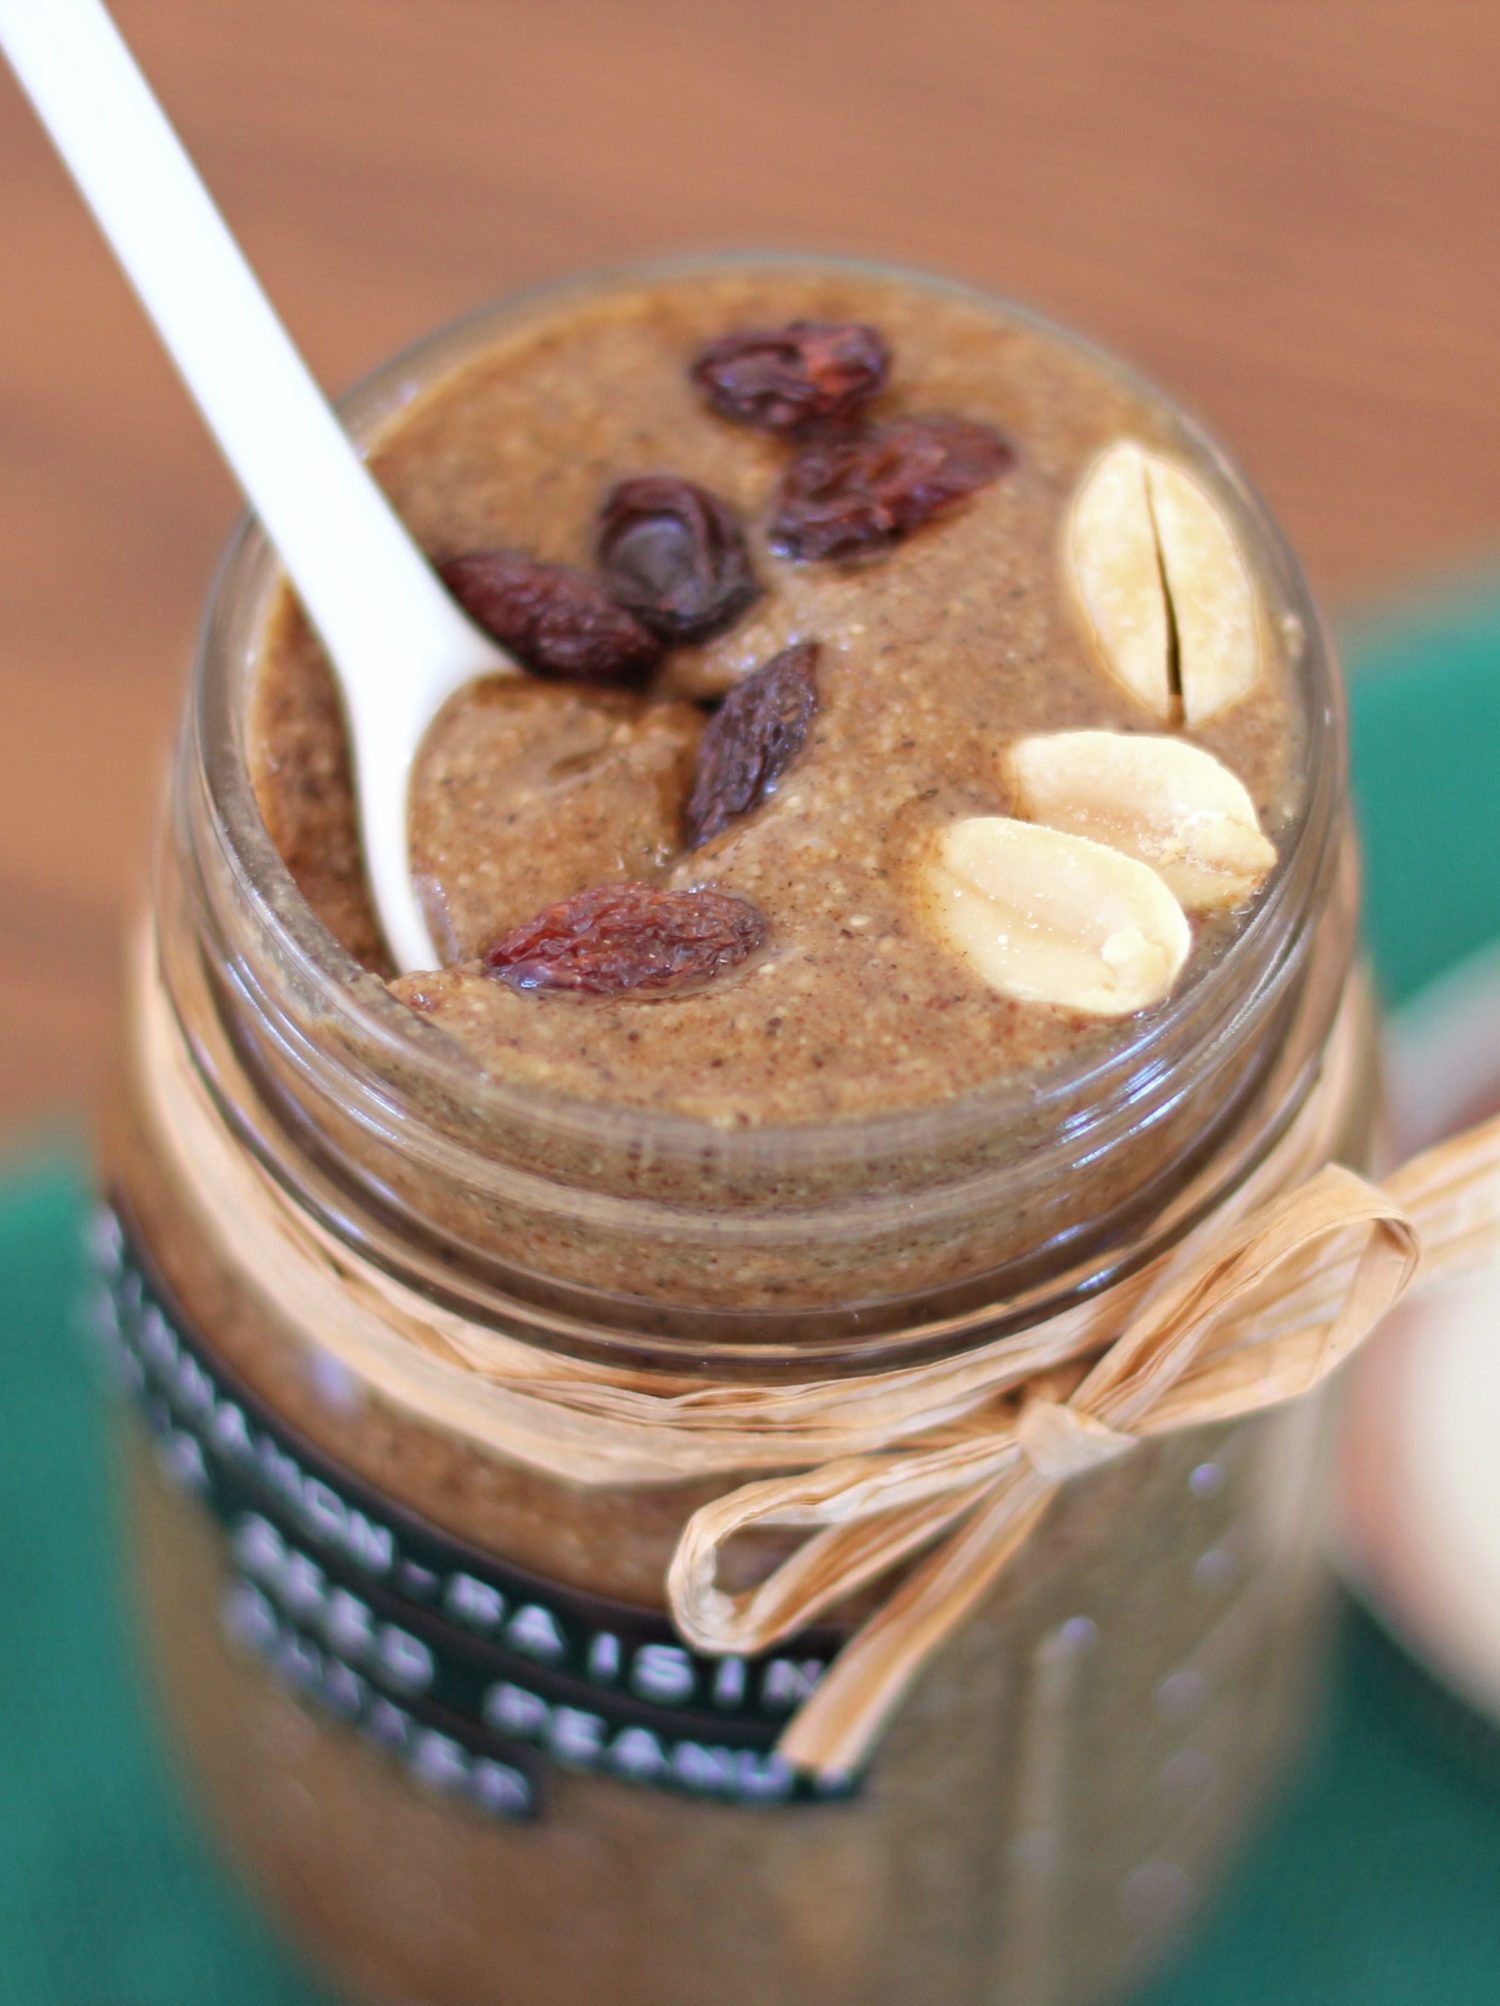 Healthy Cinnamon Raisin Chia Seed Peanut Butter (refined sugar free, gluten free, dairy free, vegan) - Healthy Dessert Recipes at Desserts with Benefits